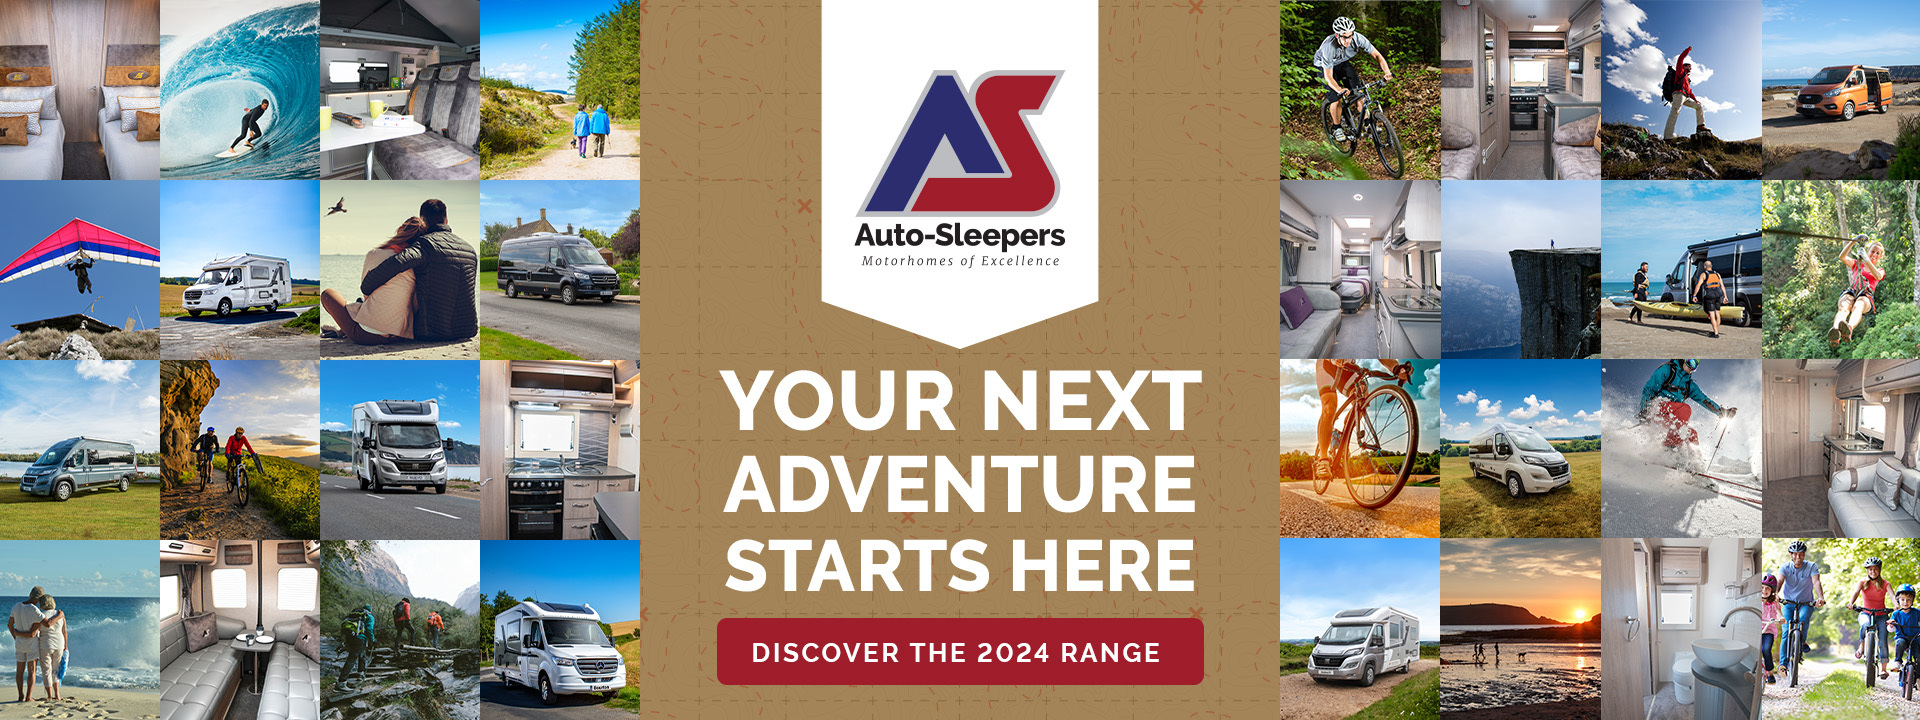 Auto-Sleepers Homepage Banner